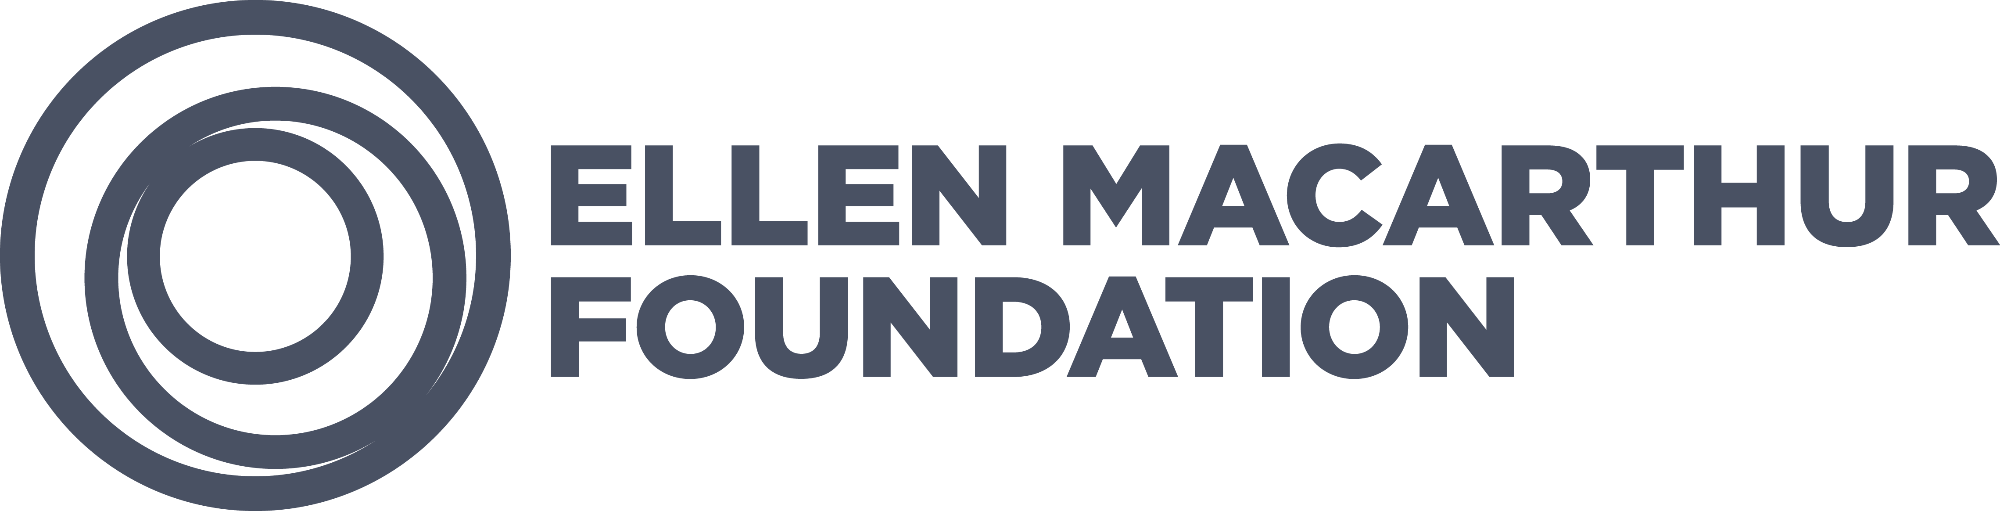 UWC - Ellen MacArthur Foundation